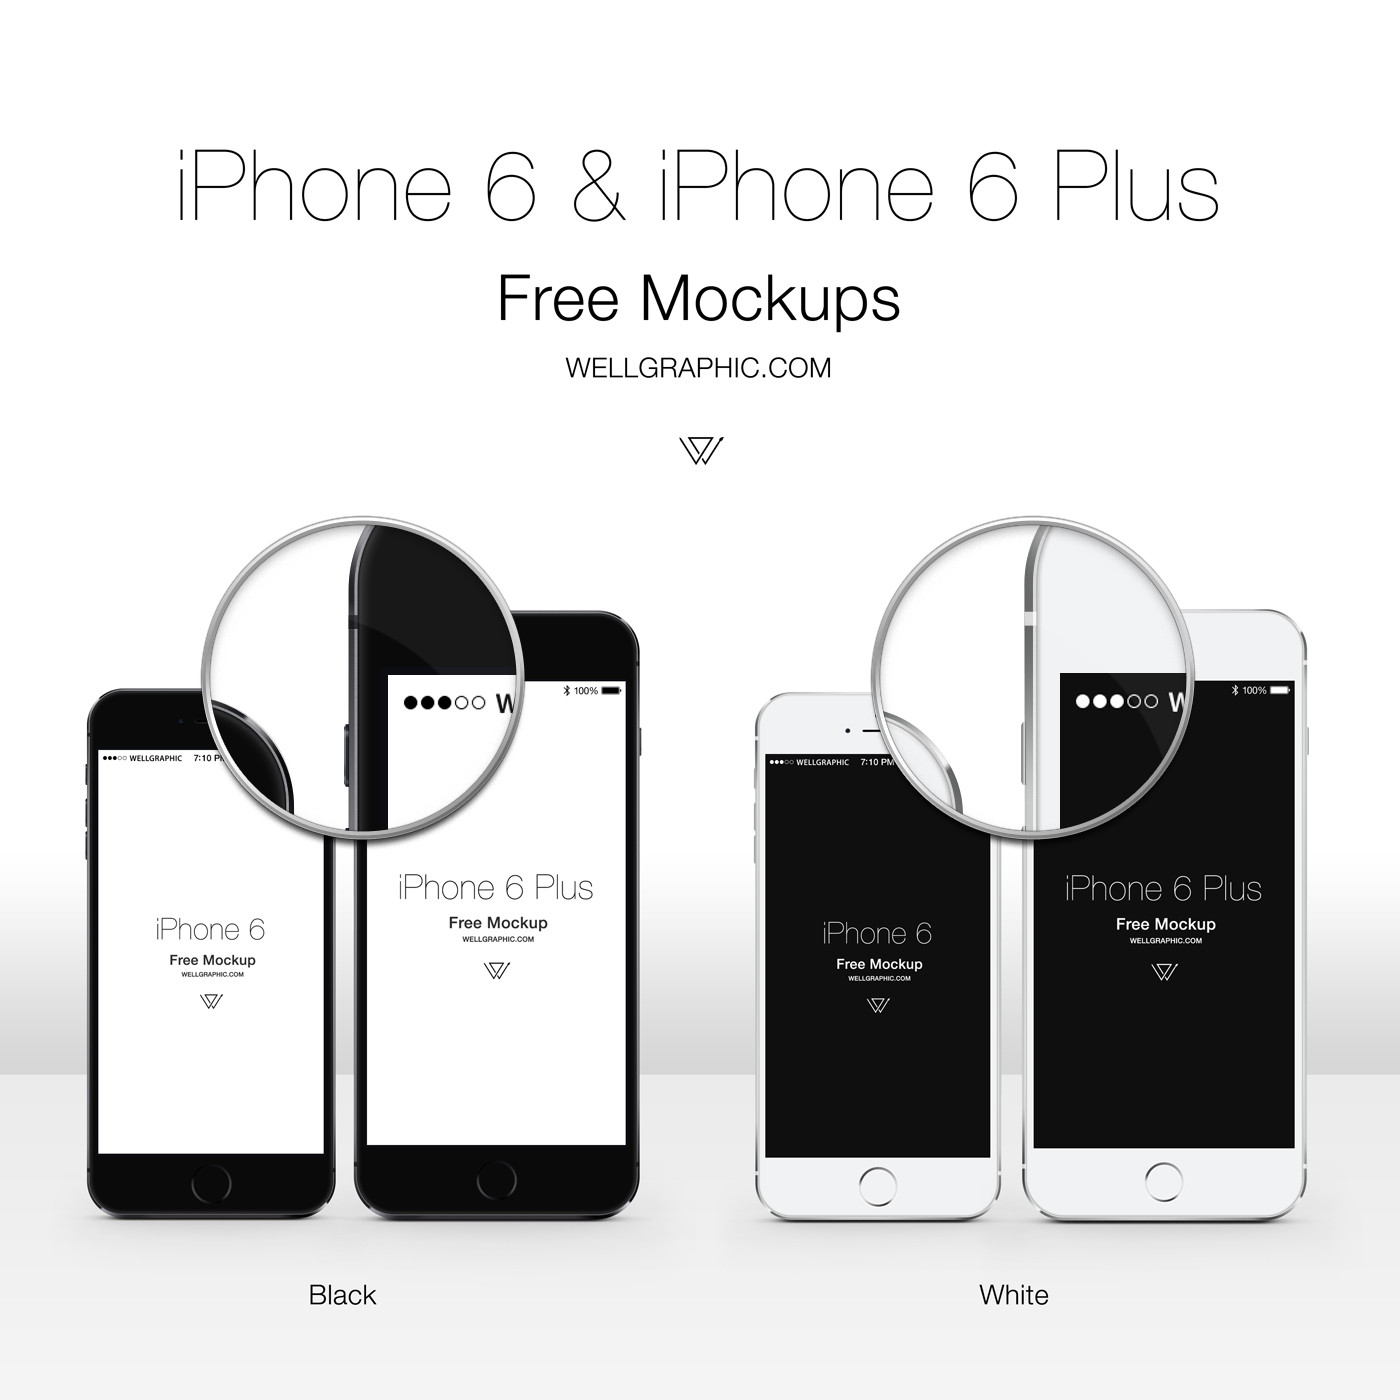 Apple-iPhone-6-and-iPhone-6-Plus-MOCKUP-PSD-Wellgraphic.com-Presentation